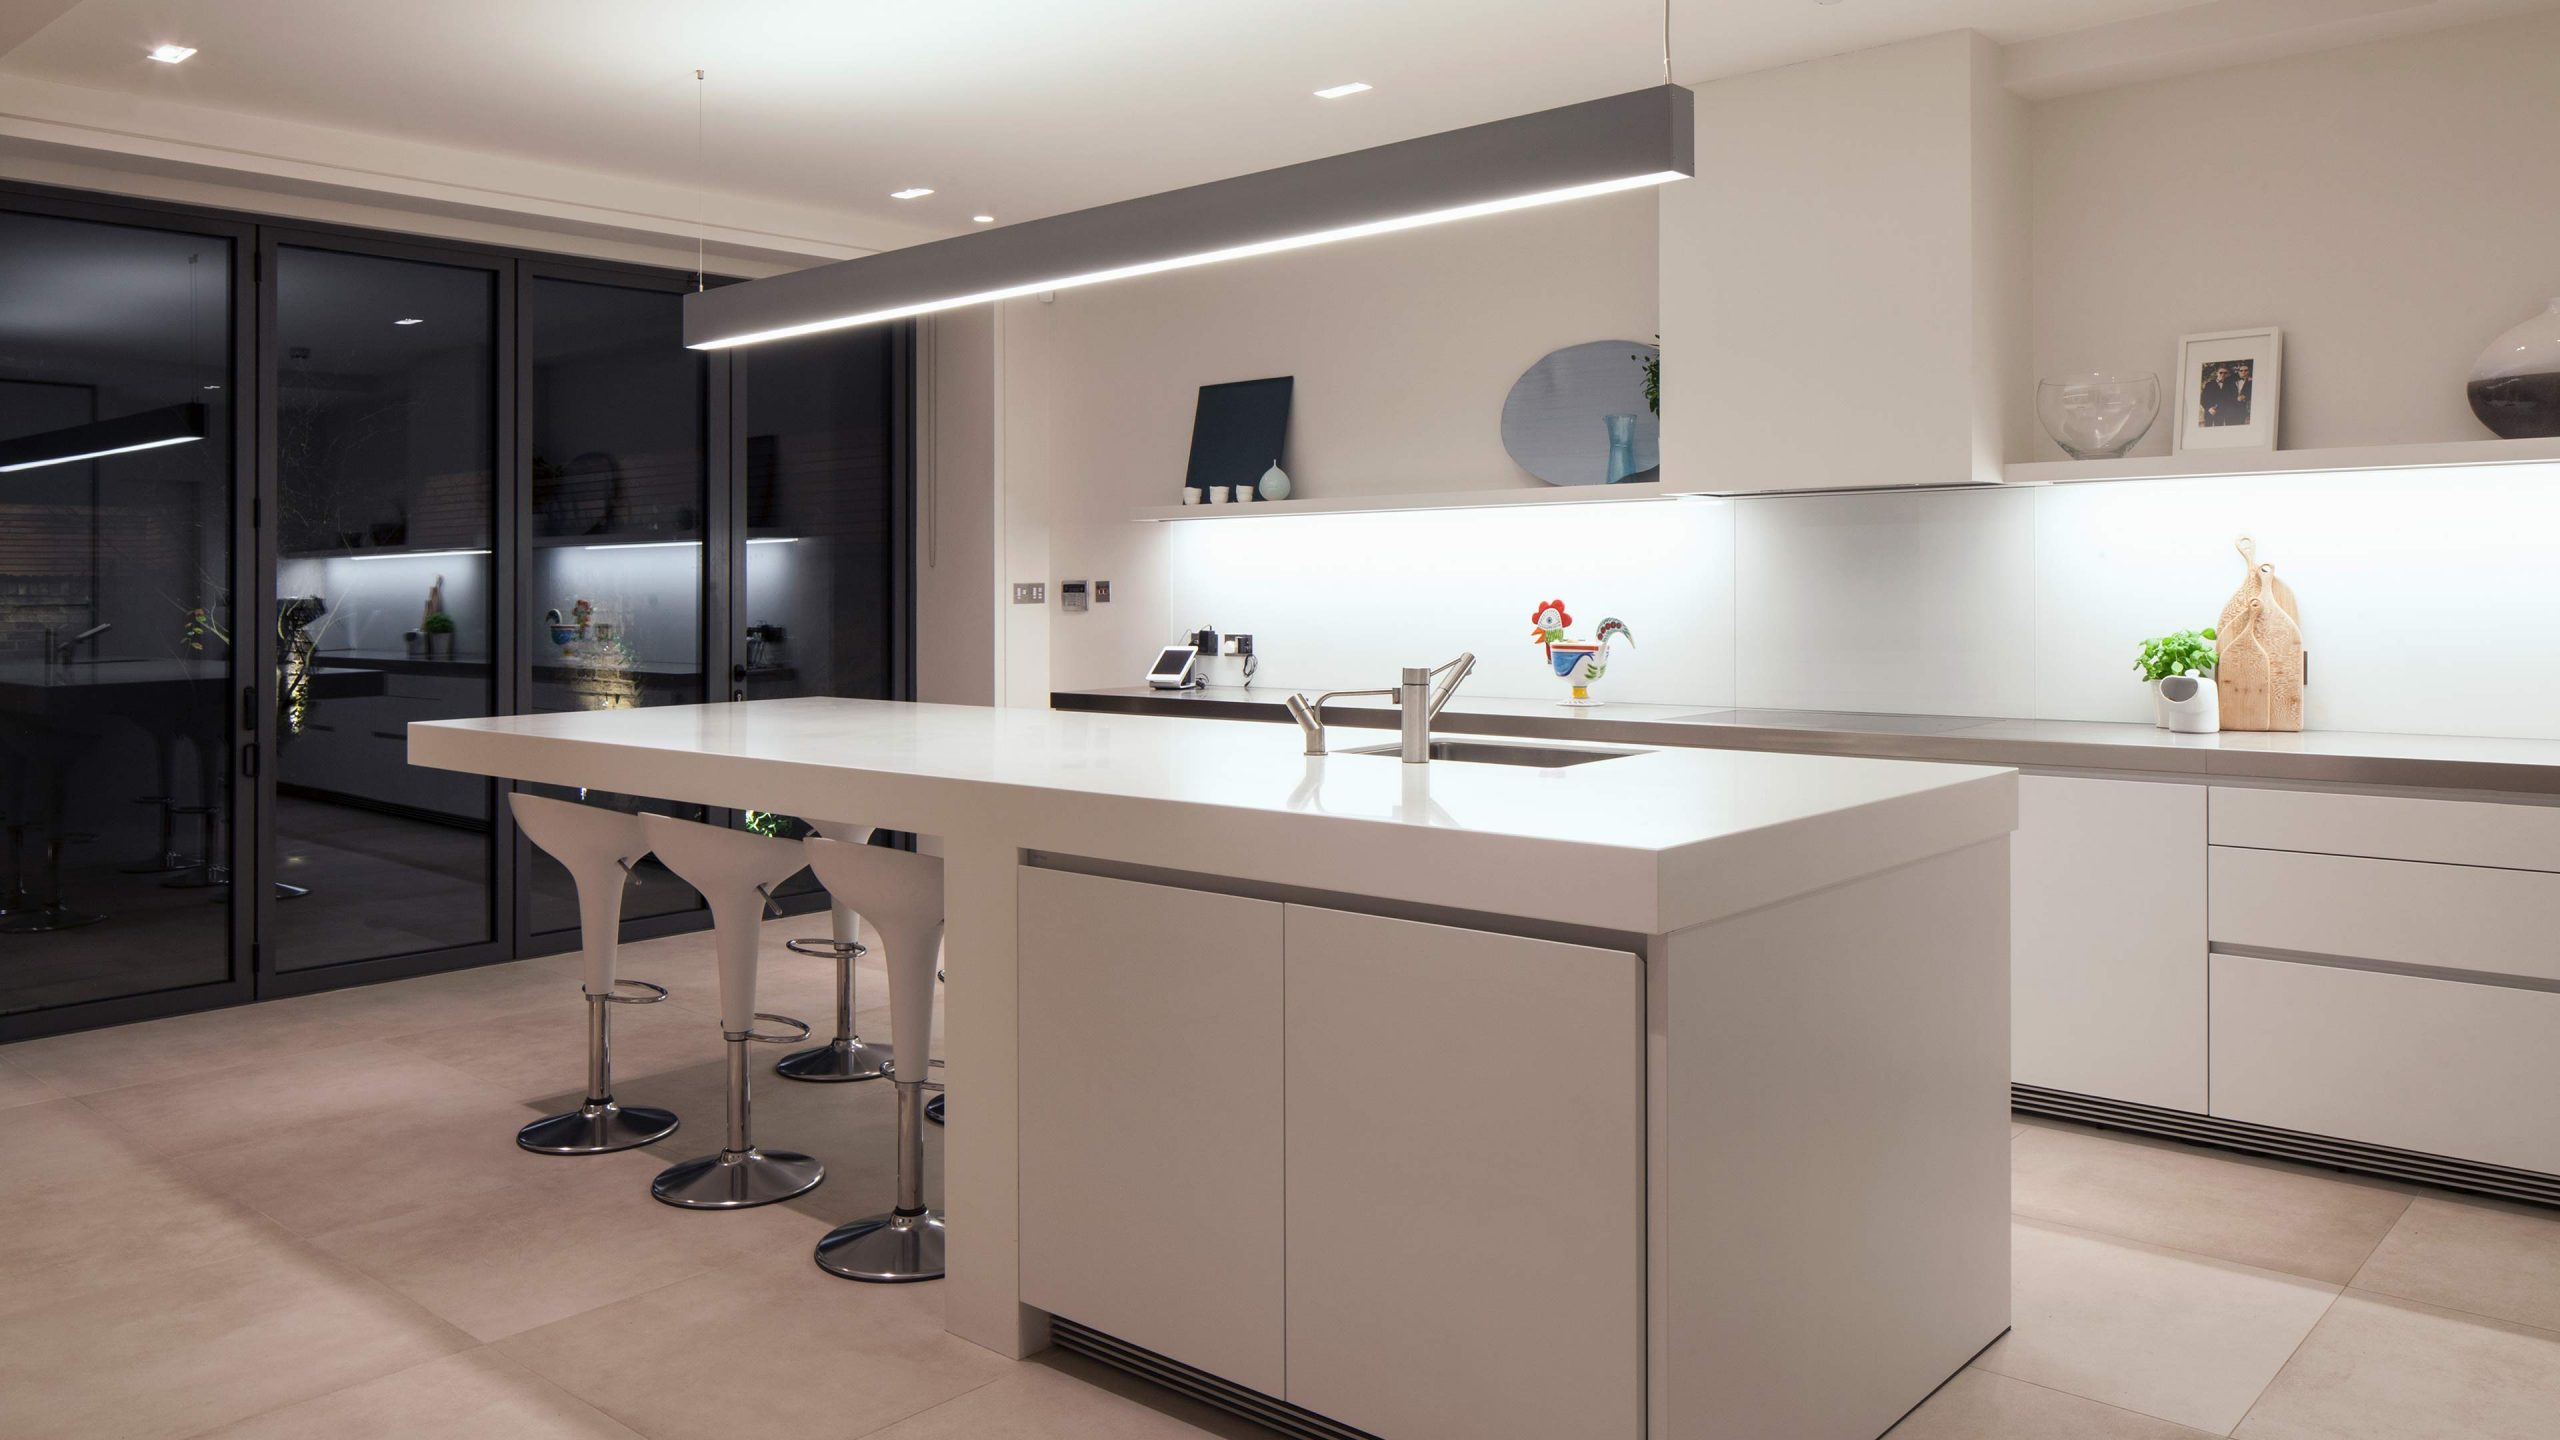 Architectural Lighting Design Contemporary Home Kitchen Island Interior Studio N 2560x1440 